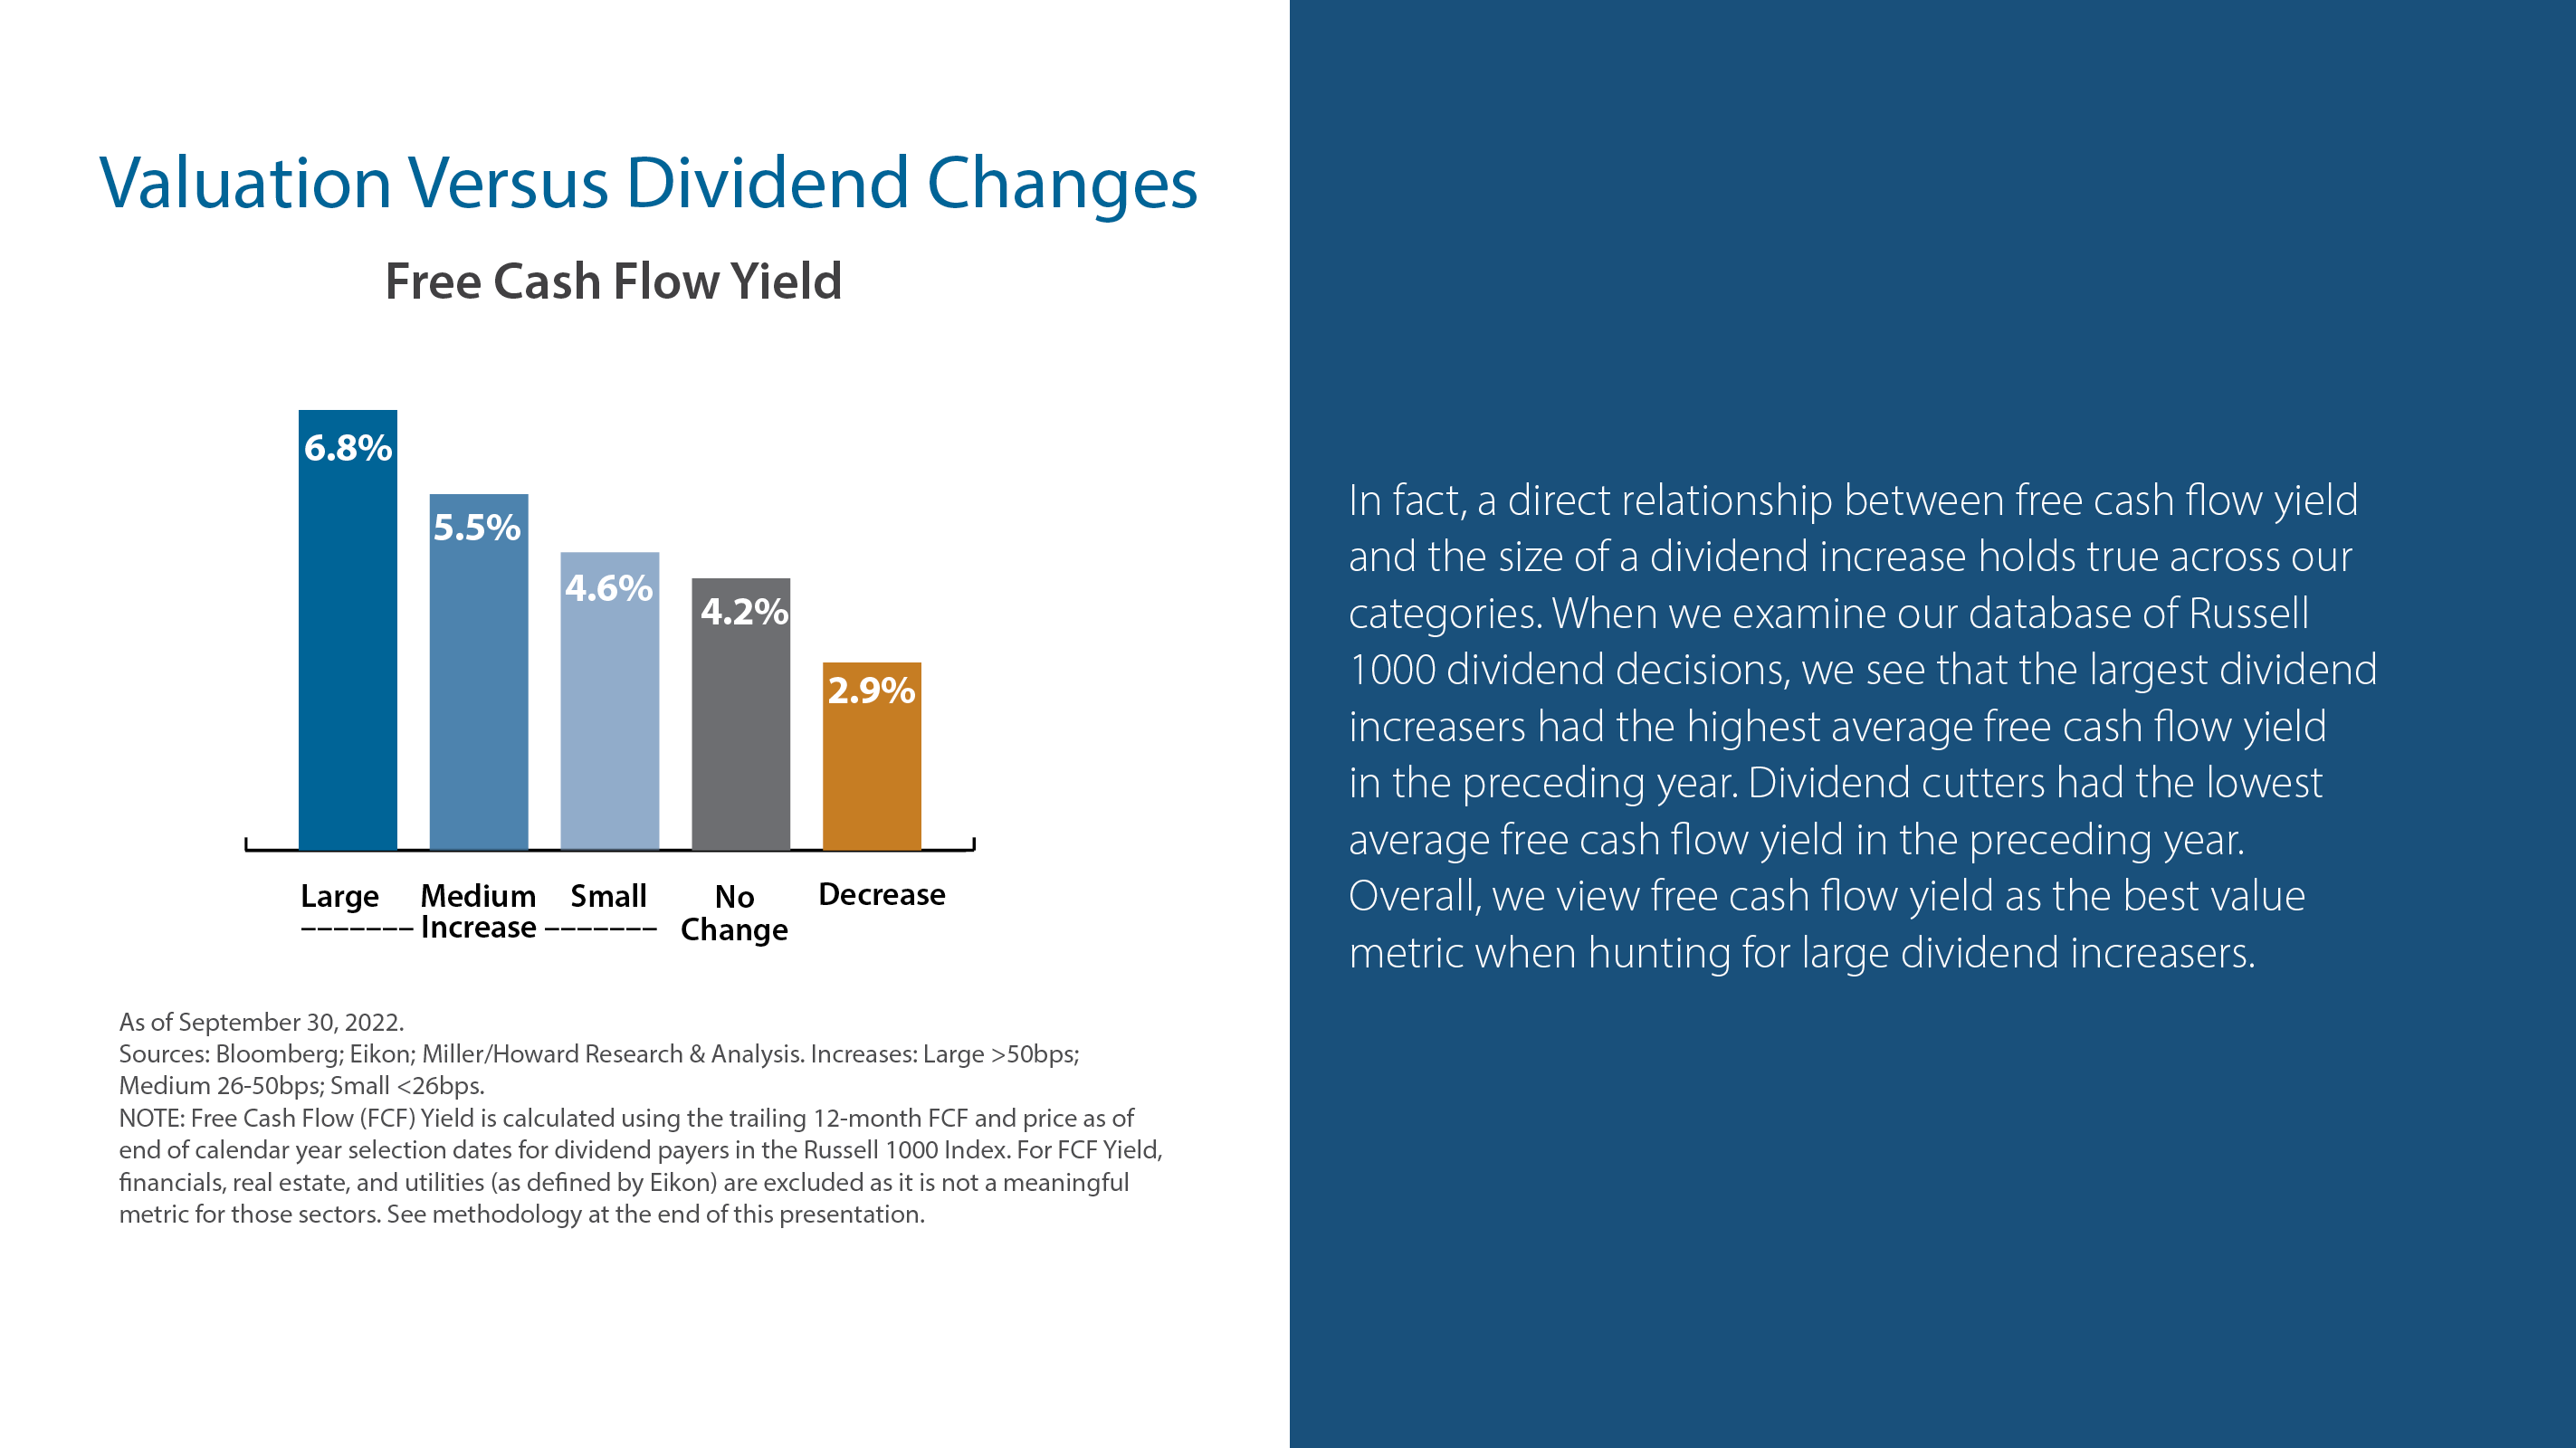 Valuation Versus Dividend Changes 3 - Free Cash Flow Yield